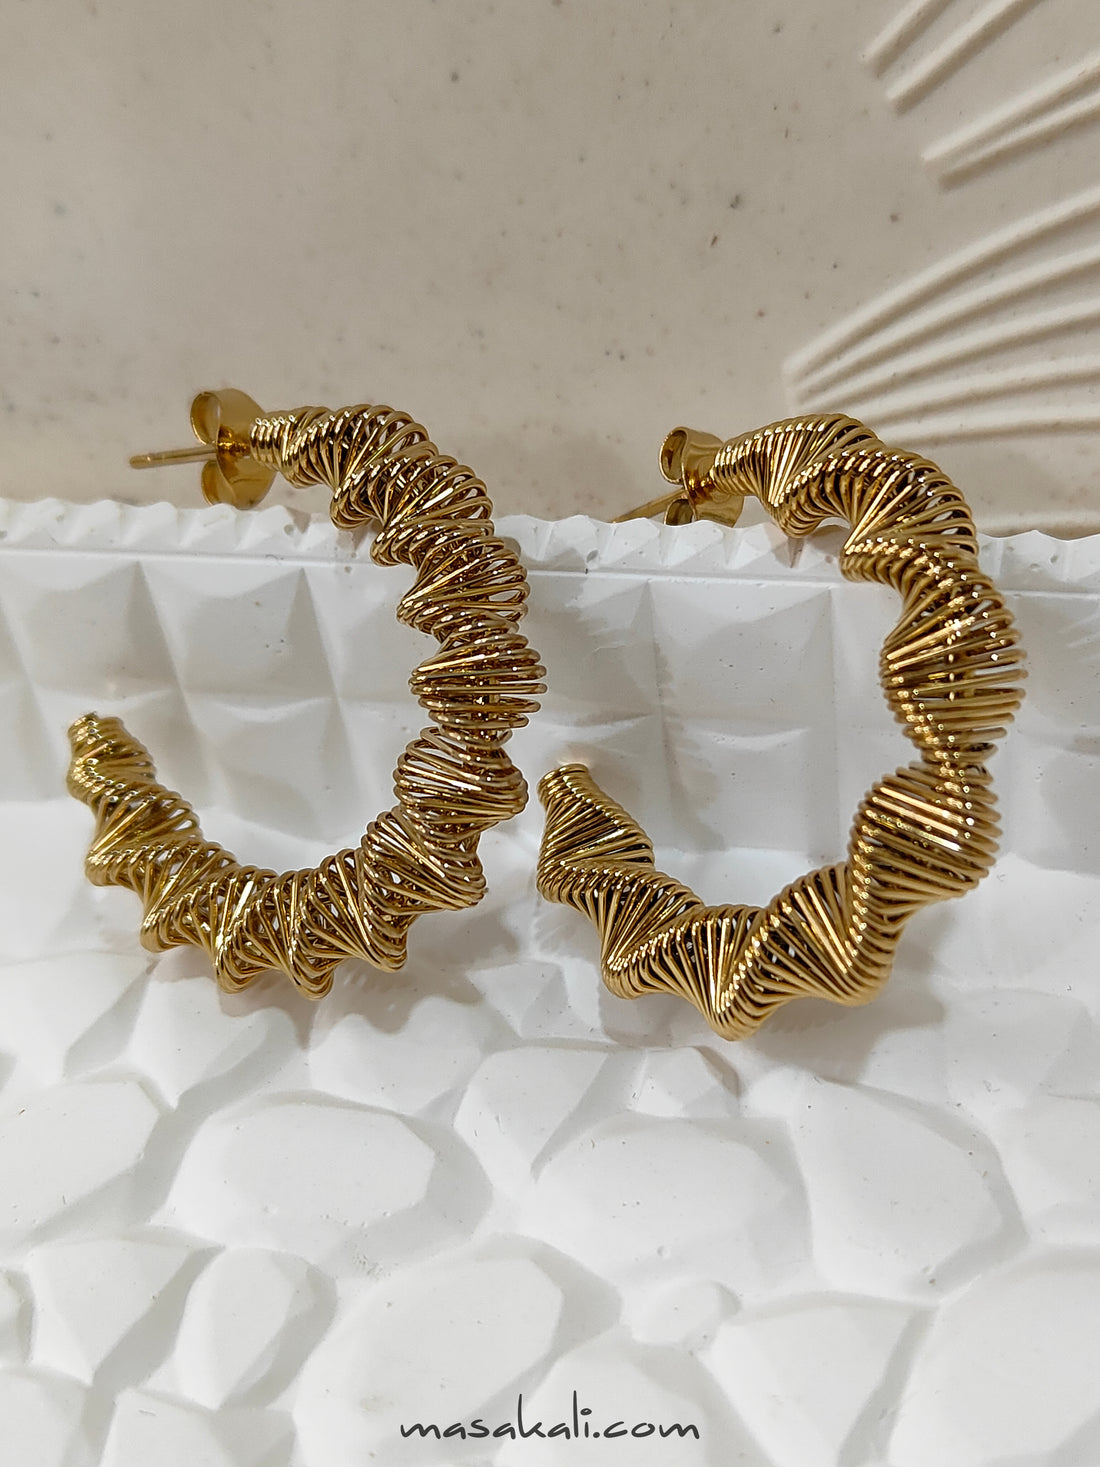 Twisted C-shaped Earrings, Spiral Hoops Earrings, Gold-plated Anti-Tarnish Earrings